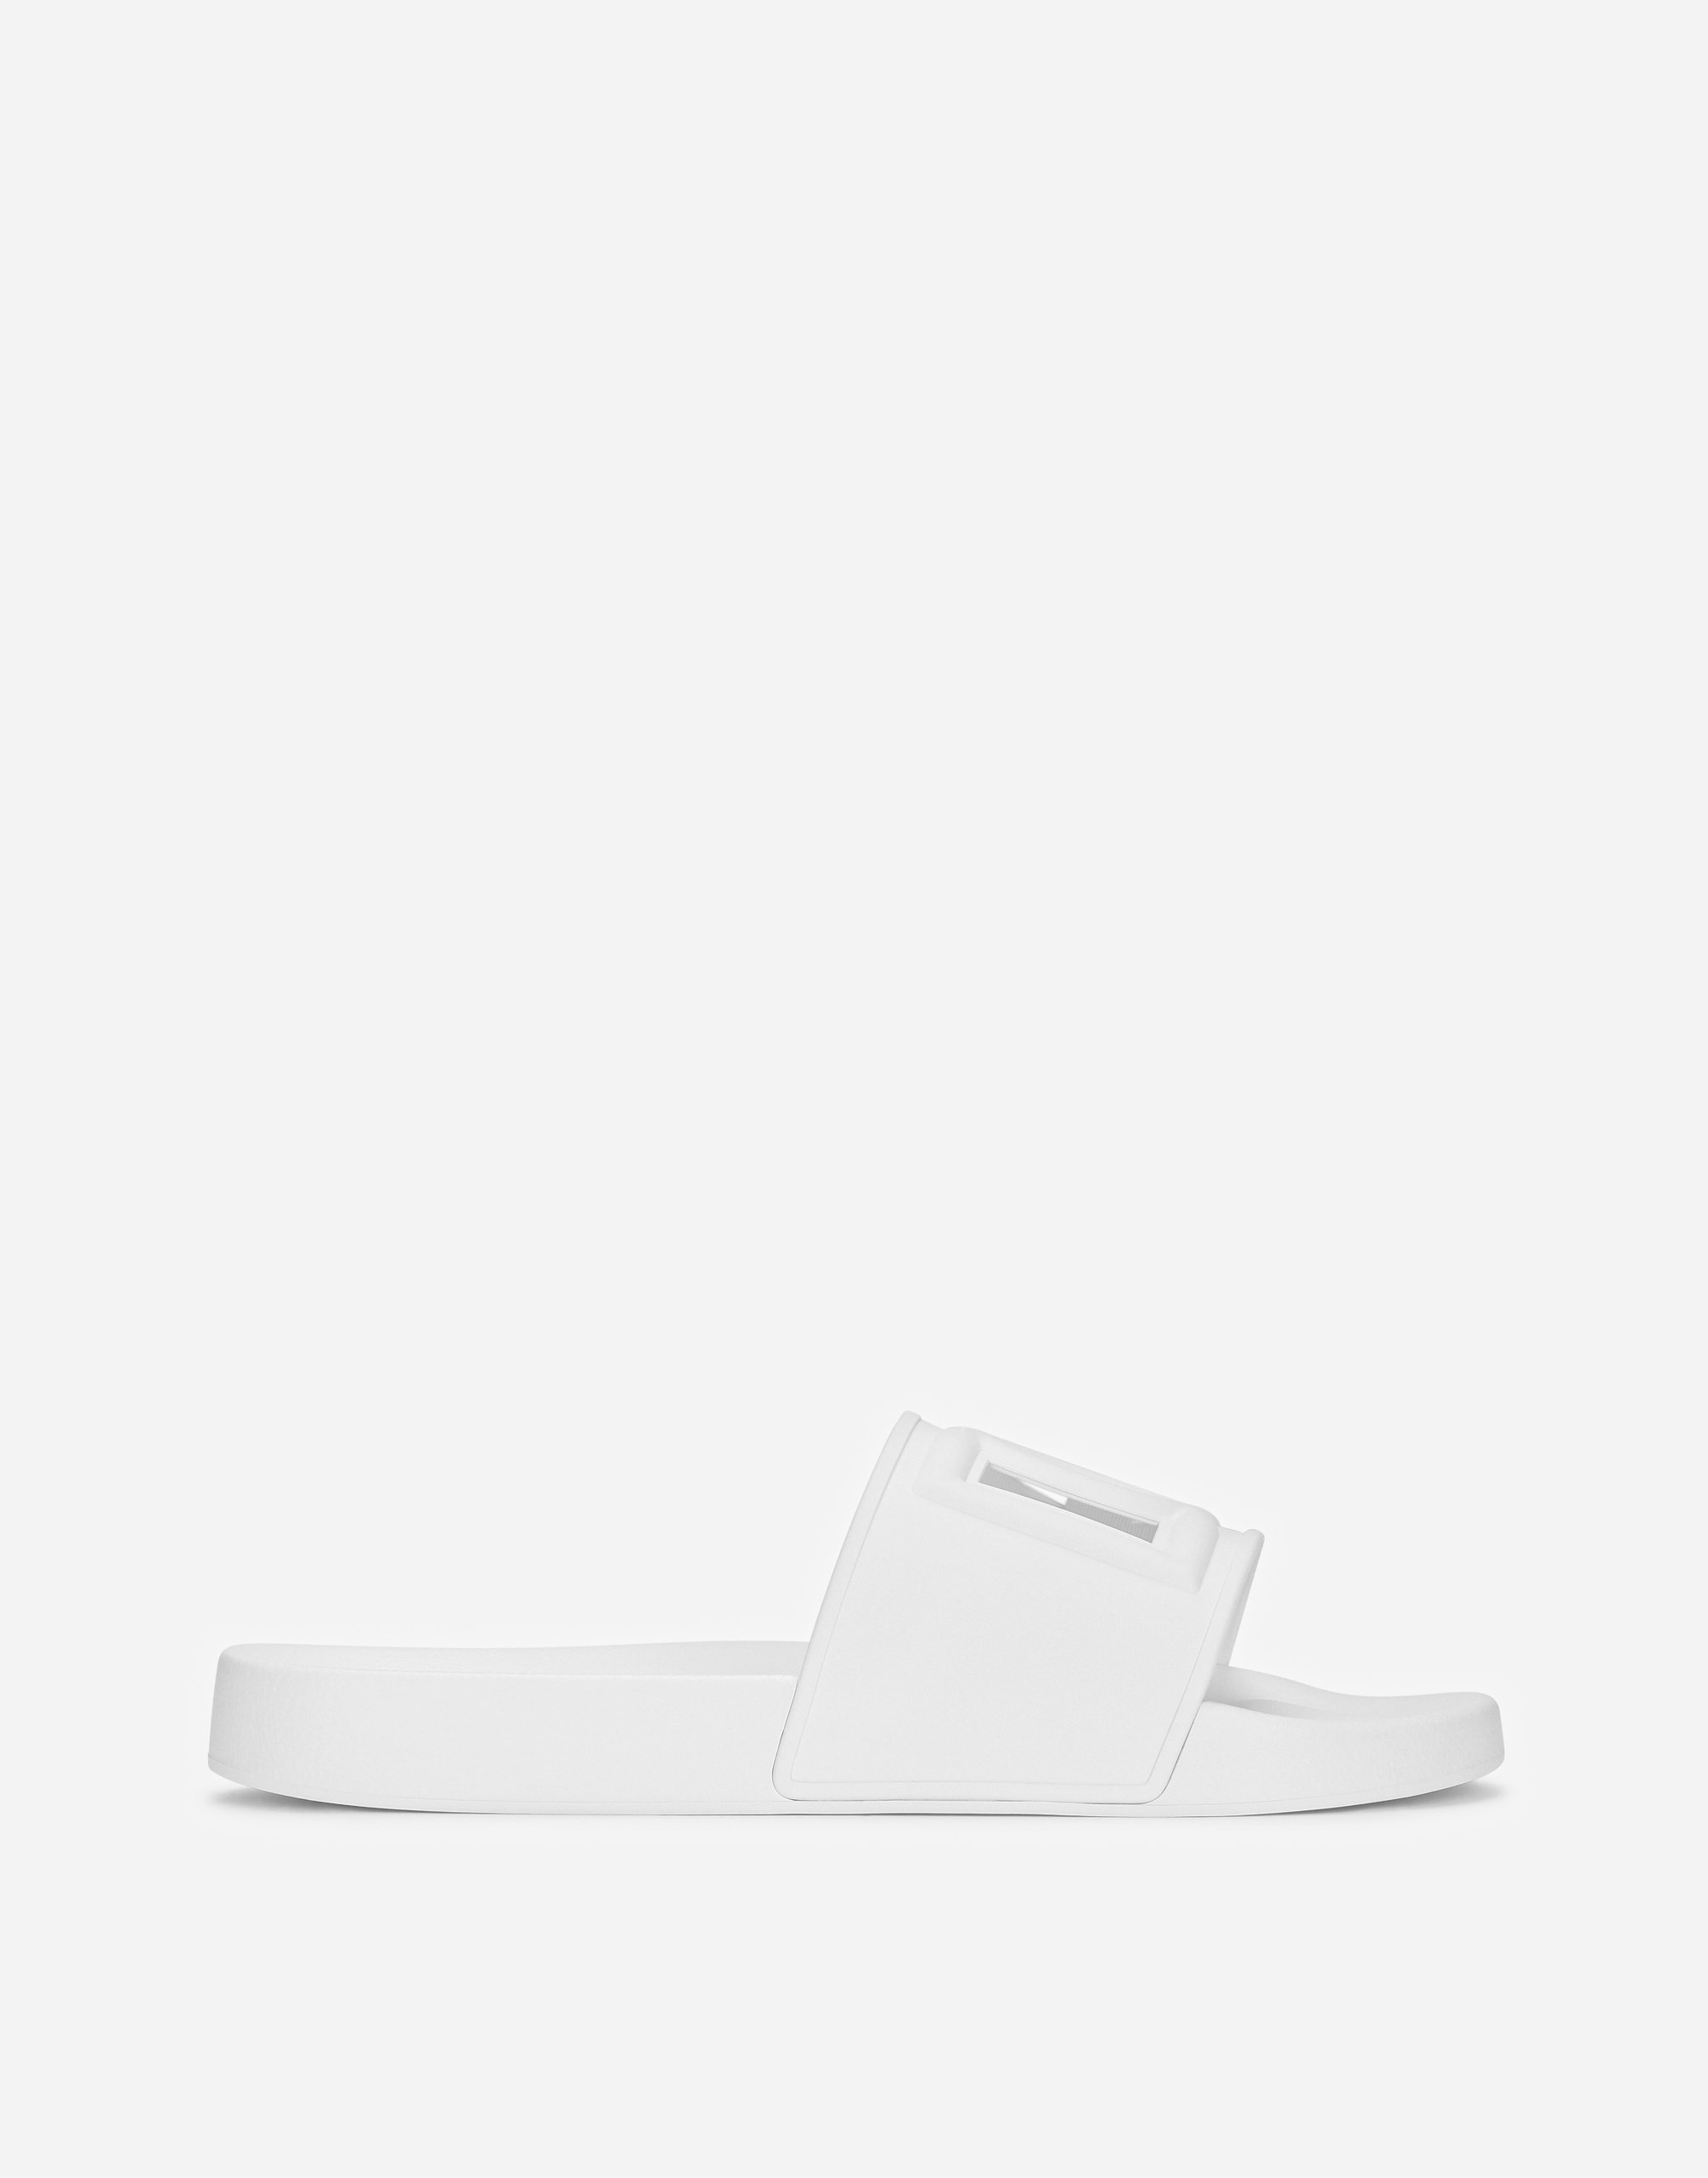 Dolce & Gabbana Rubber Beachwear Sliders With Dg Logo In White